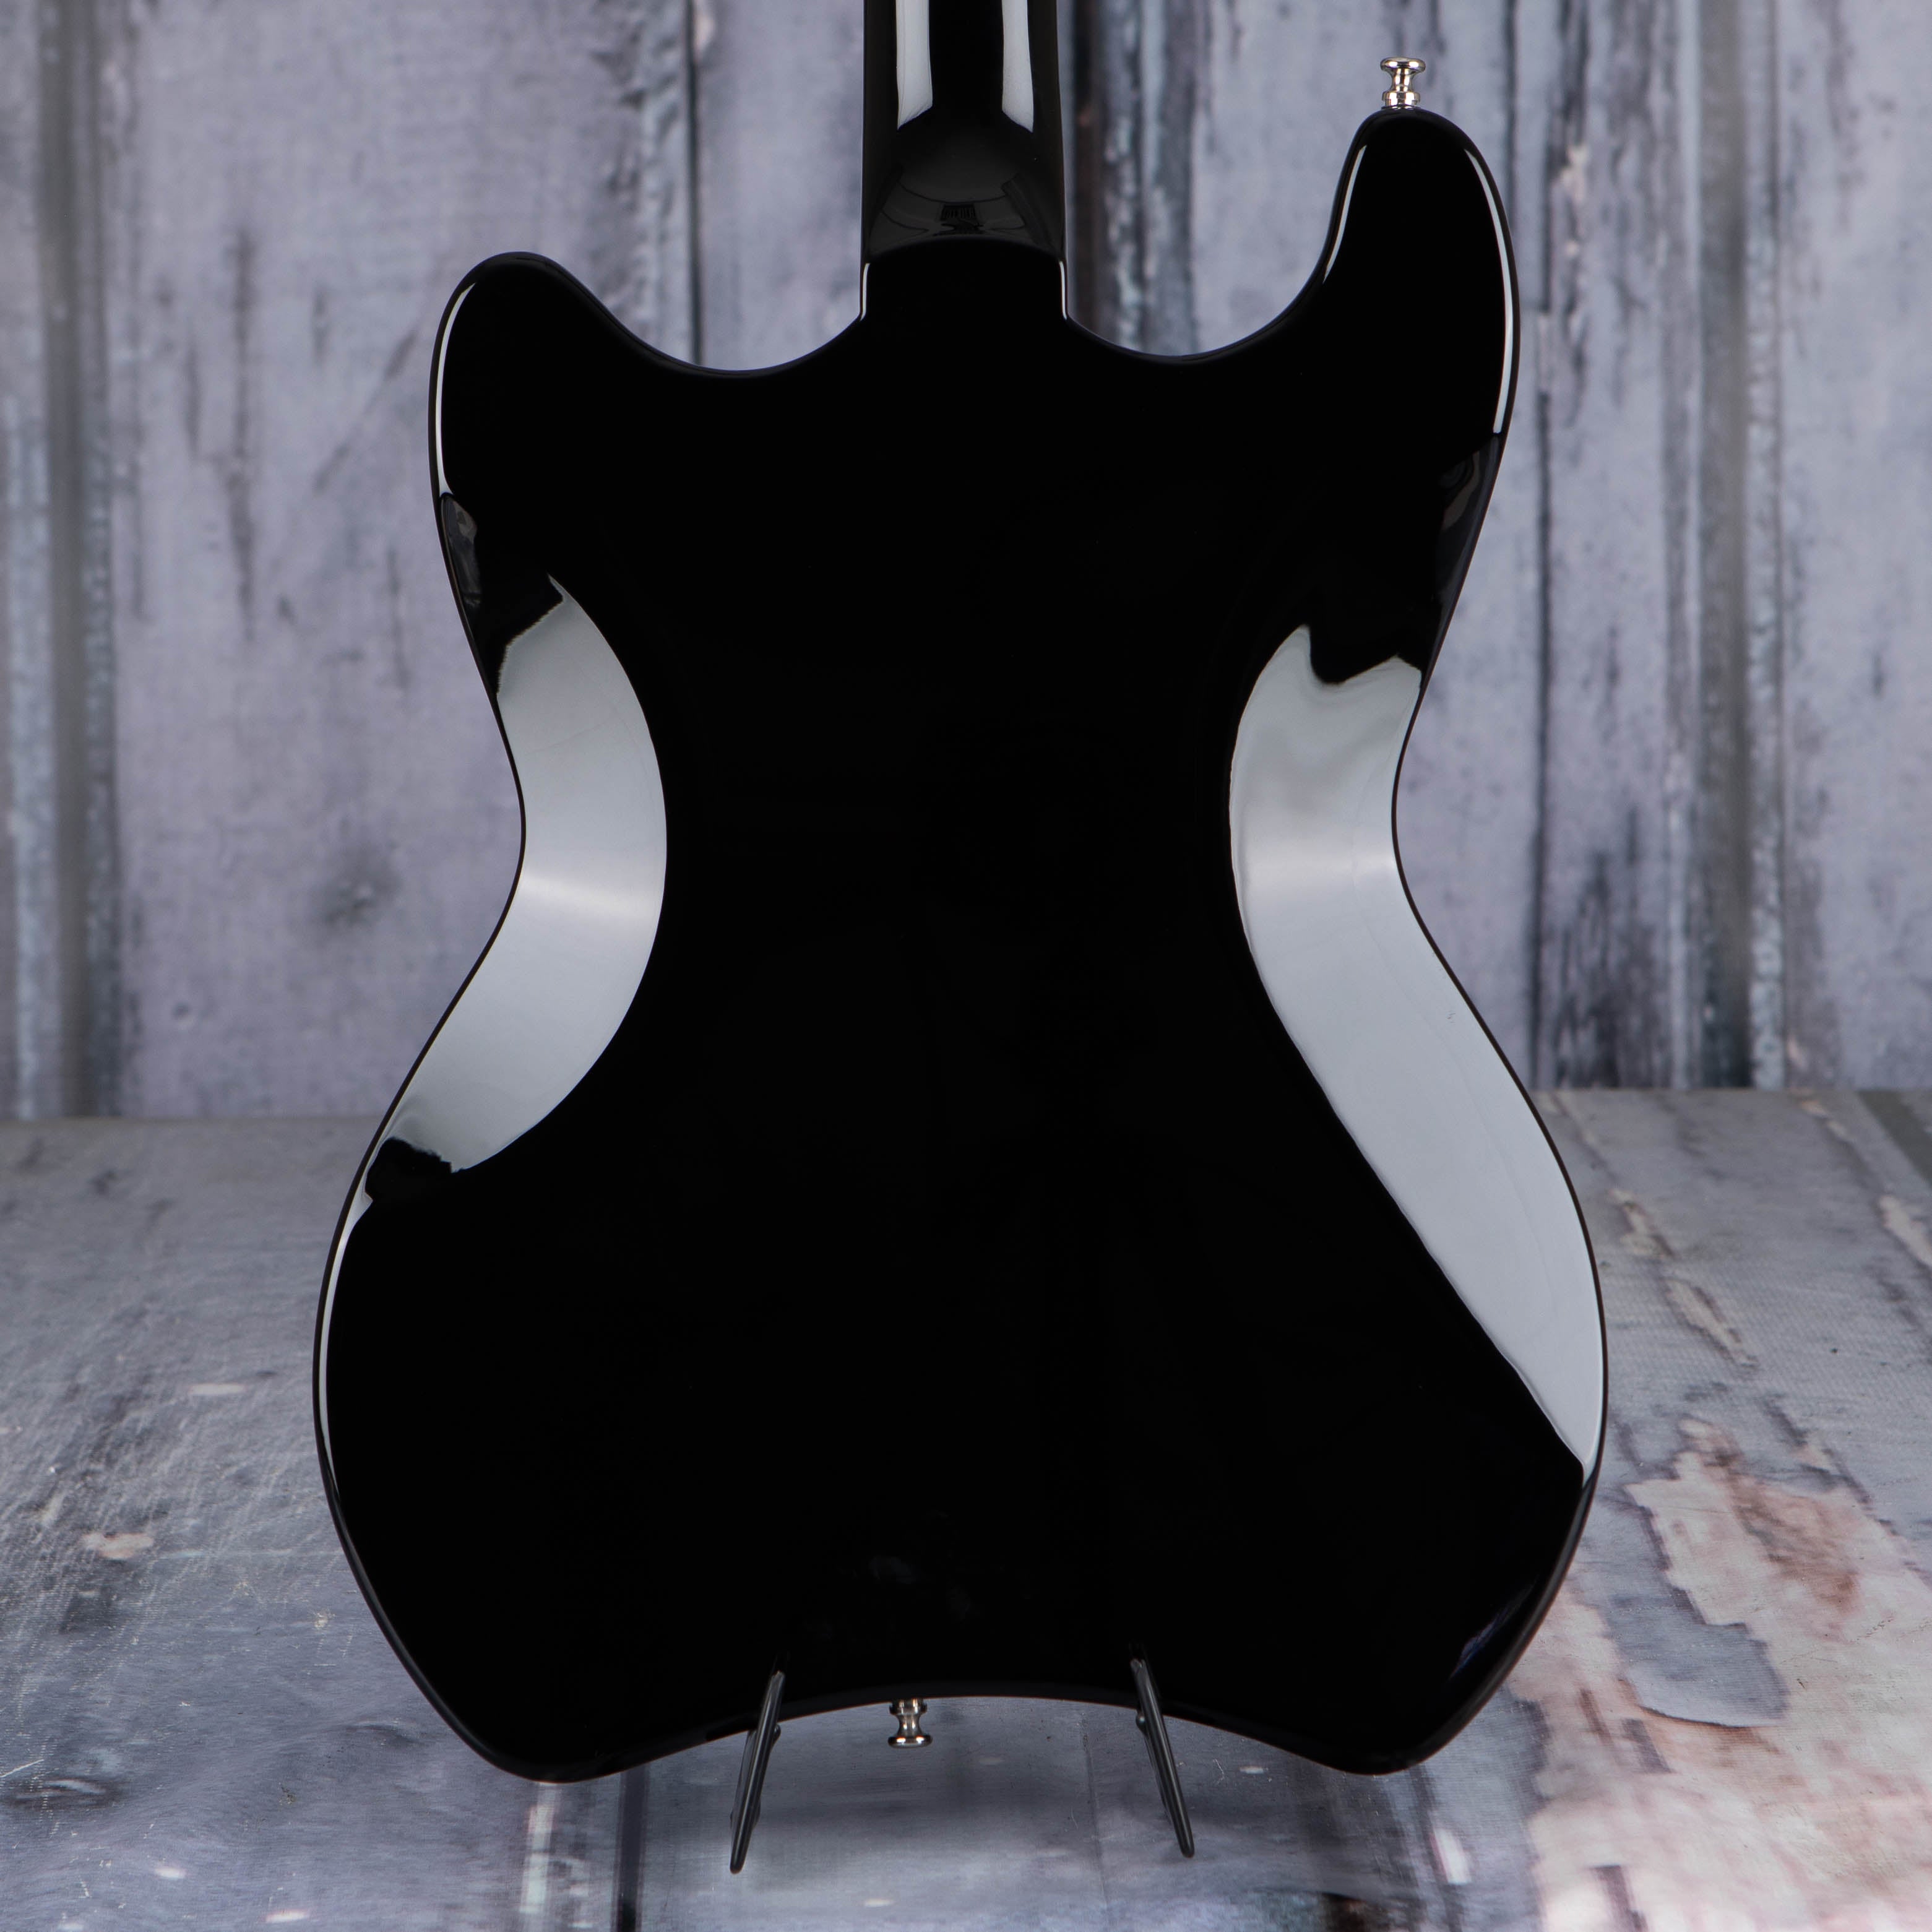 Guild Jetstar ST Electric Guitar, Black, back closeup